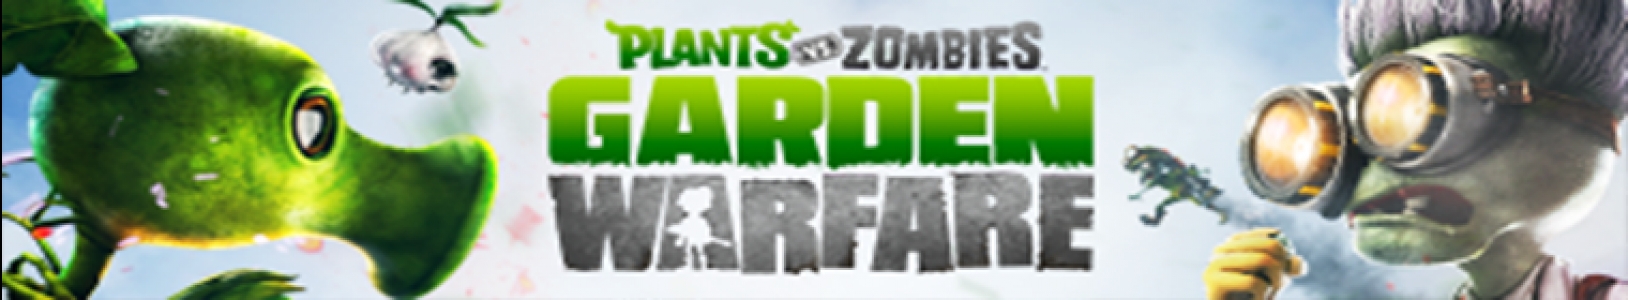 Plants vs. Zombies: Garden Warfare banner